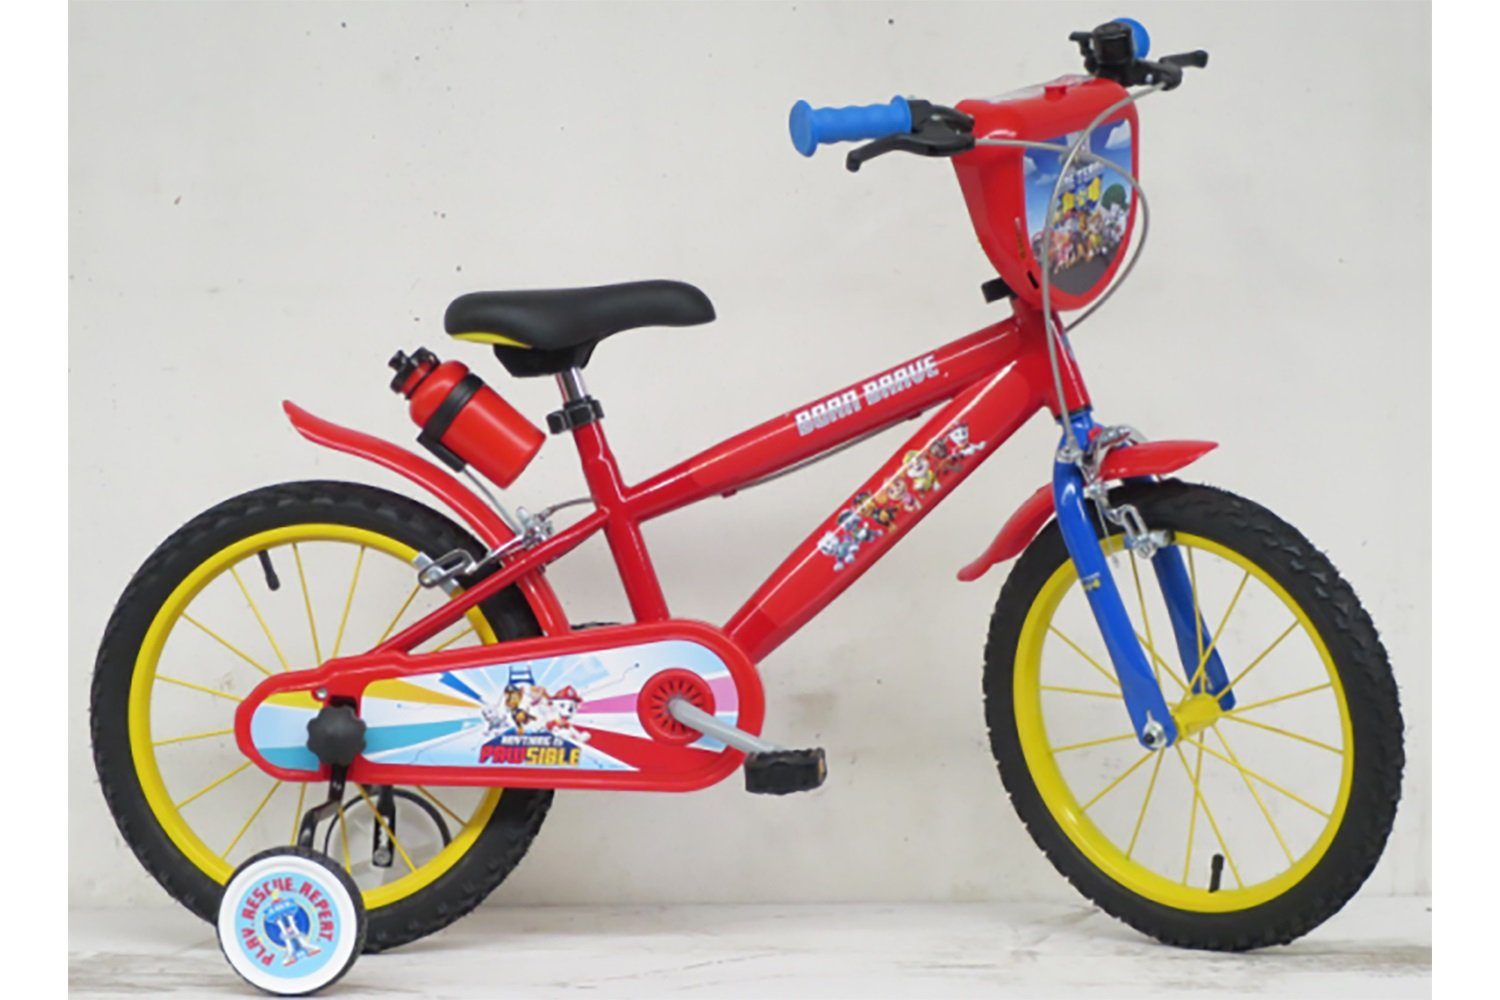 TPFSports Kinderfahrrad Paw Patrol 16 Zoll mit 2 Handbremsen, 1 Gang, (Jungsfahrrad - Jungen Kinderrad - ohne Schaltung - Sicherheitsgriffe), Kinder Jugend Fahrrad 16 Zoll - Jungsfahrrad - Rot